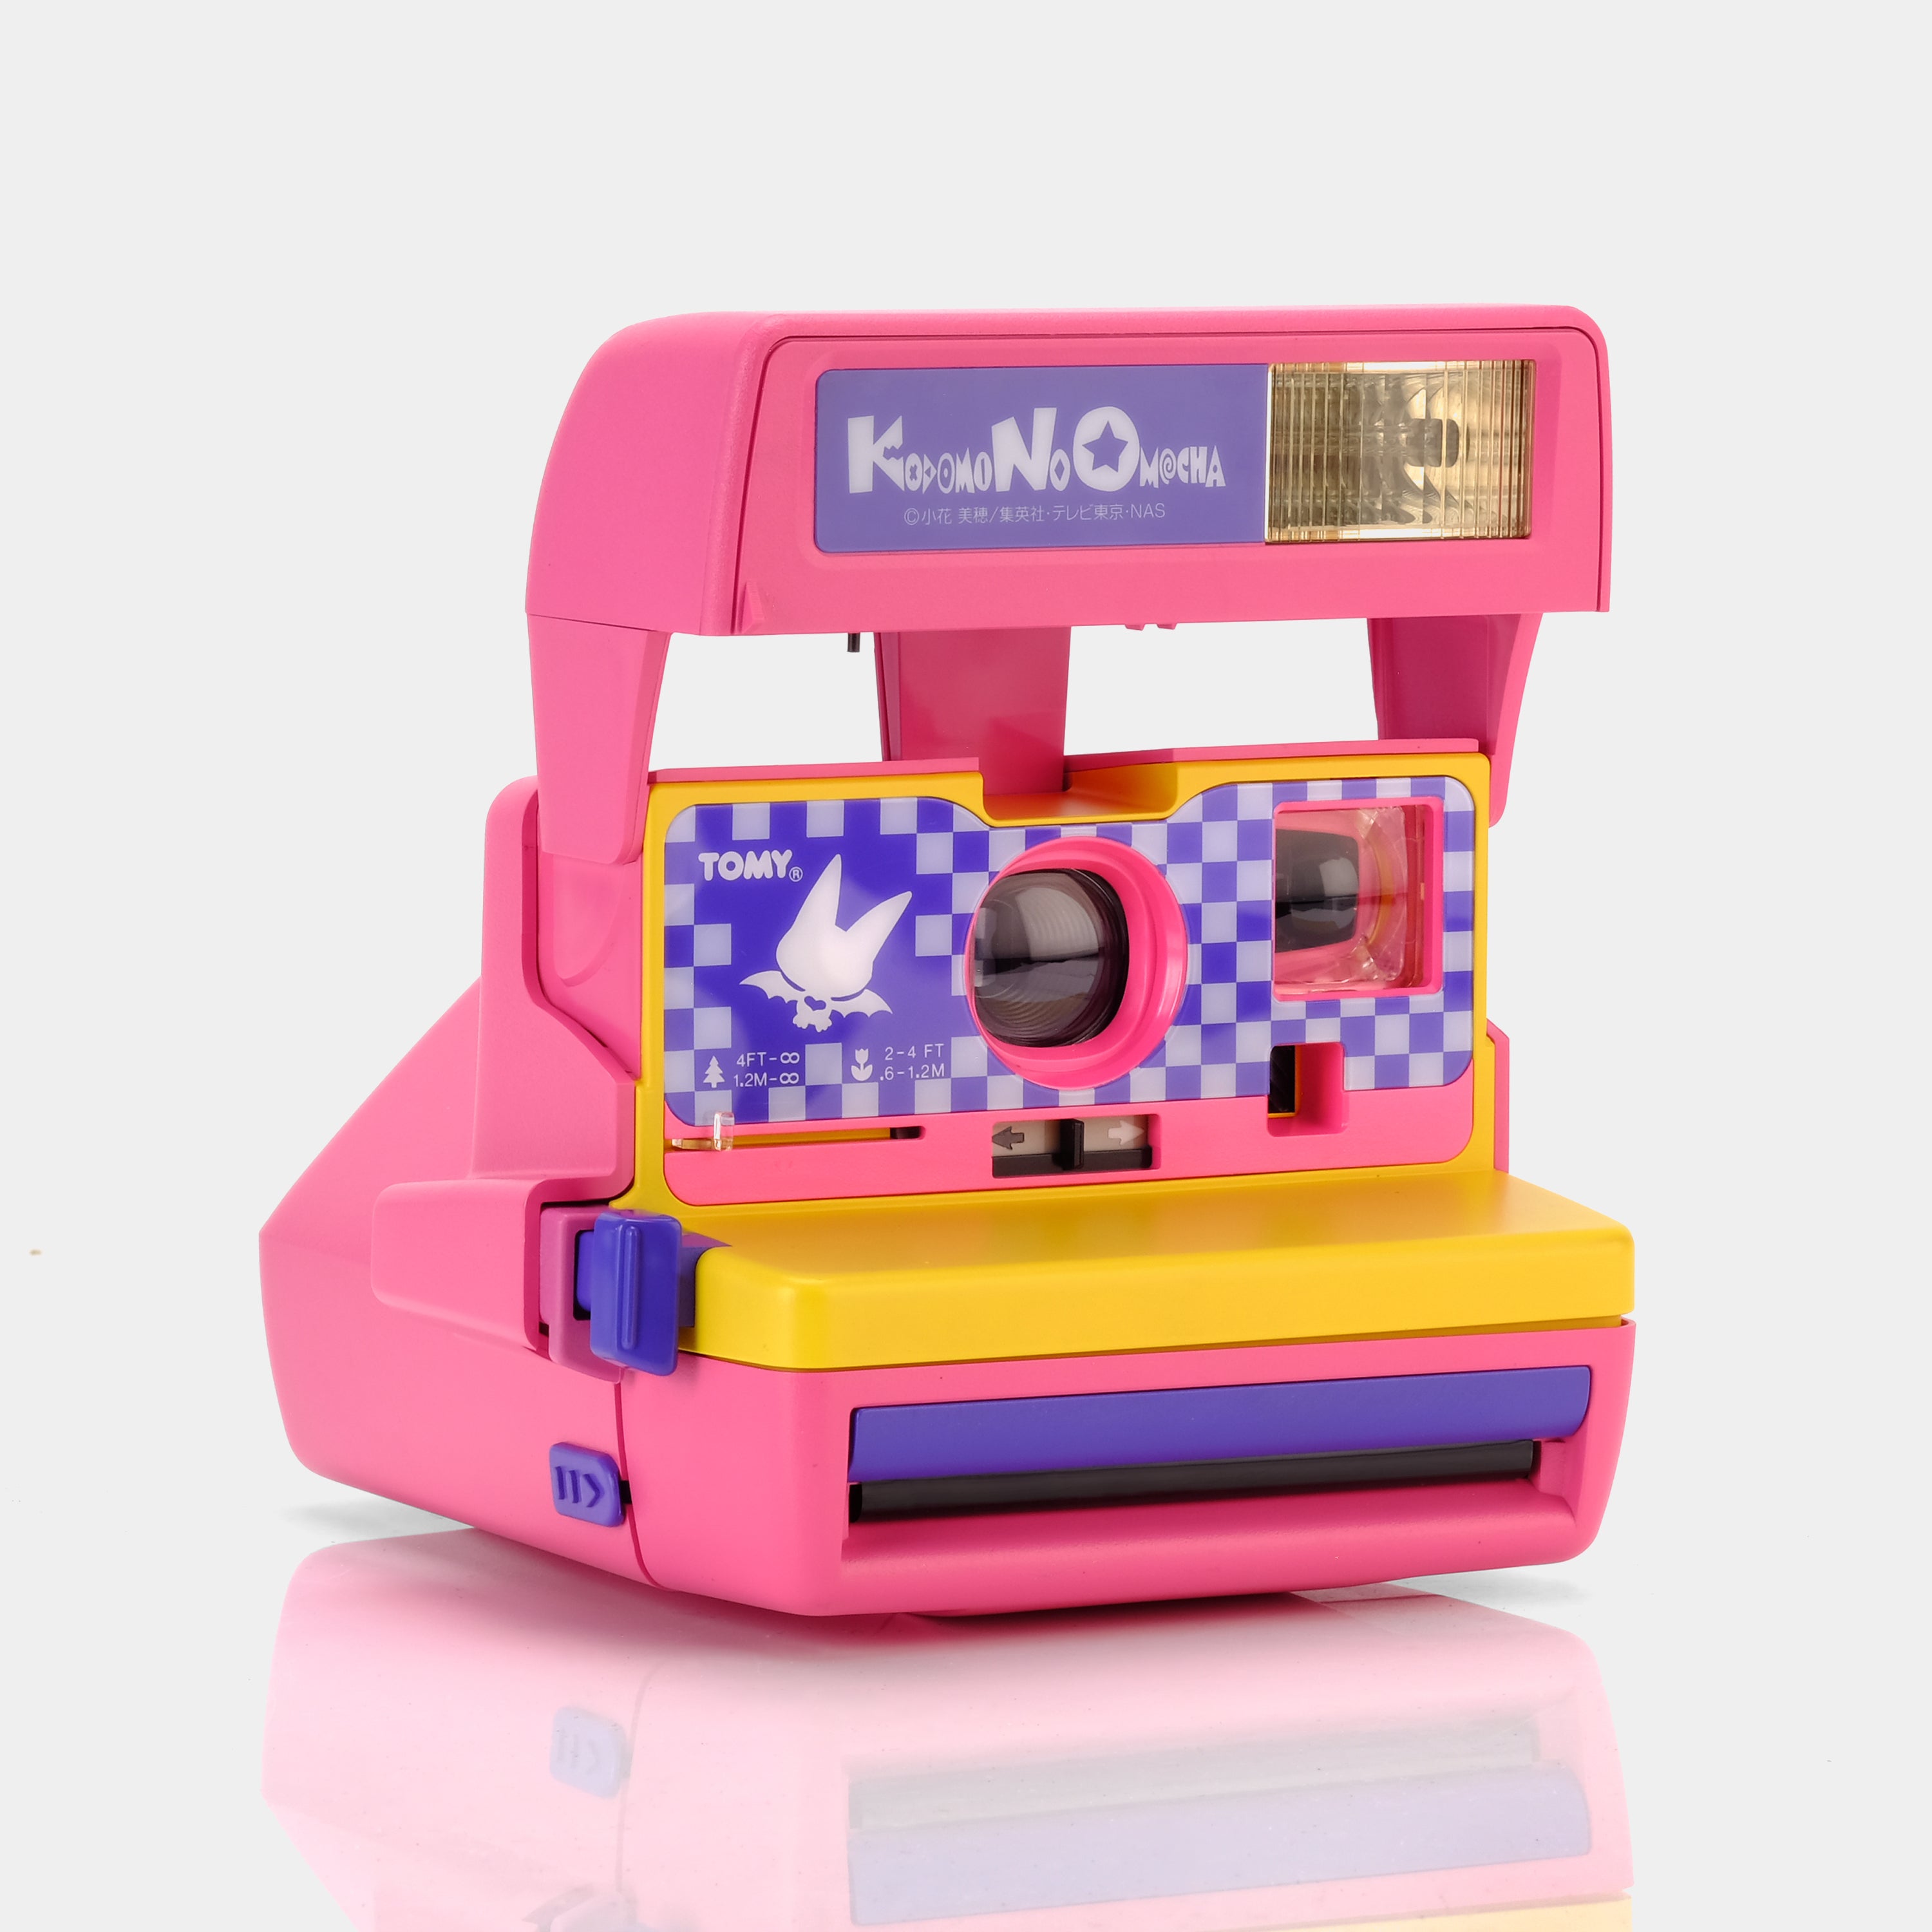 Polaroid 600 Kodomo No Omocha by Tomy Pink Instant Film Camera